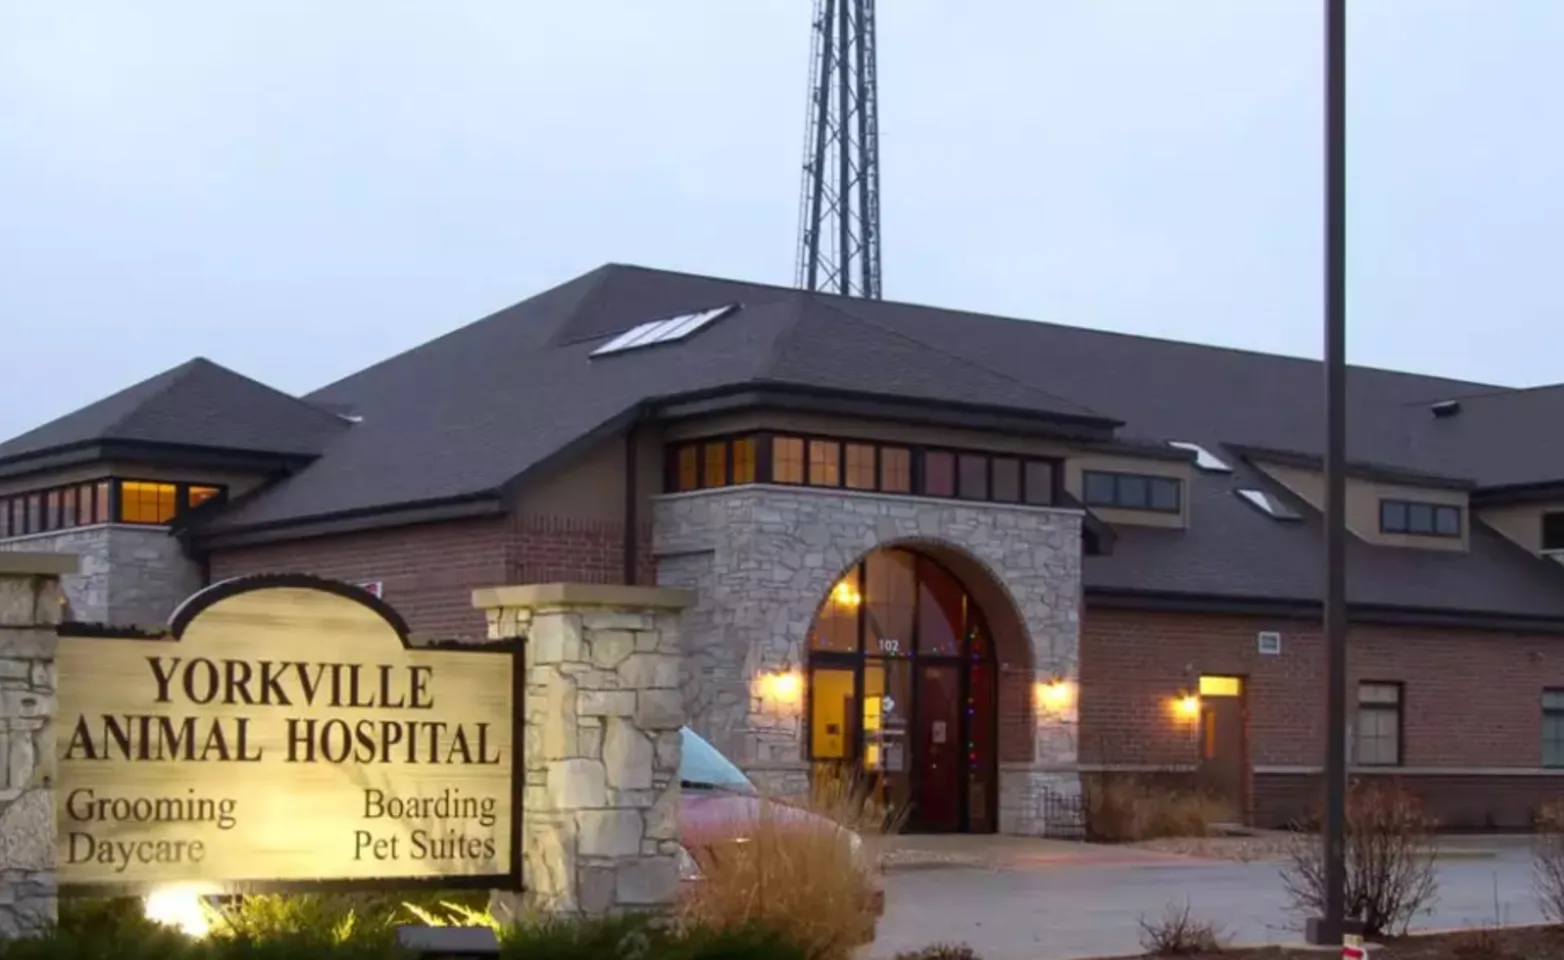 Yorkville Animal Hospital Building Exterior